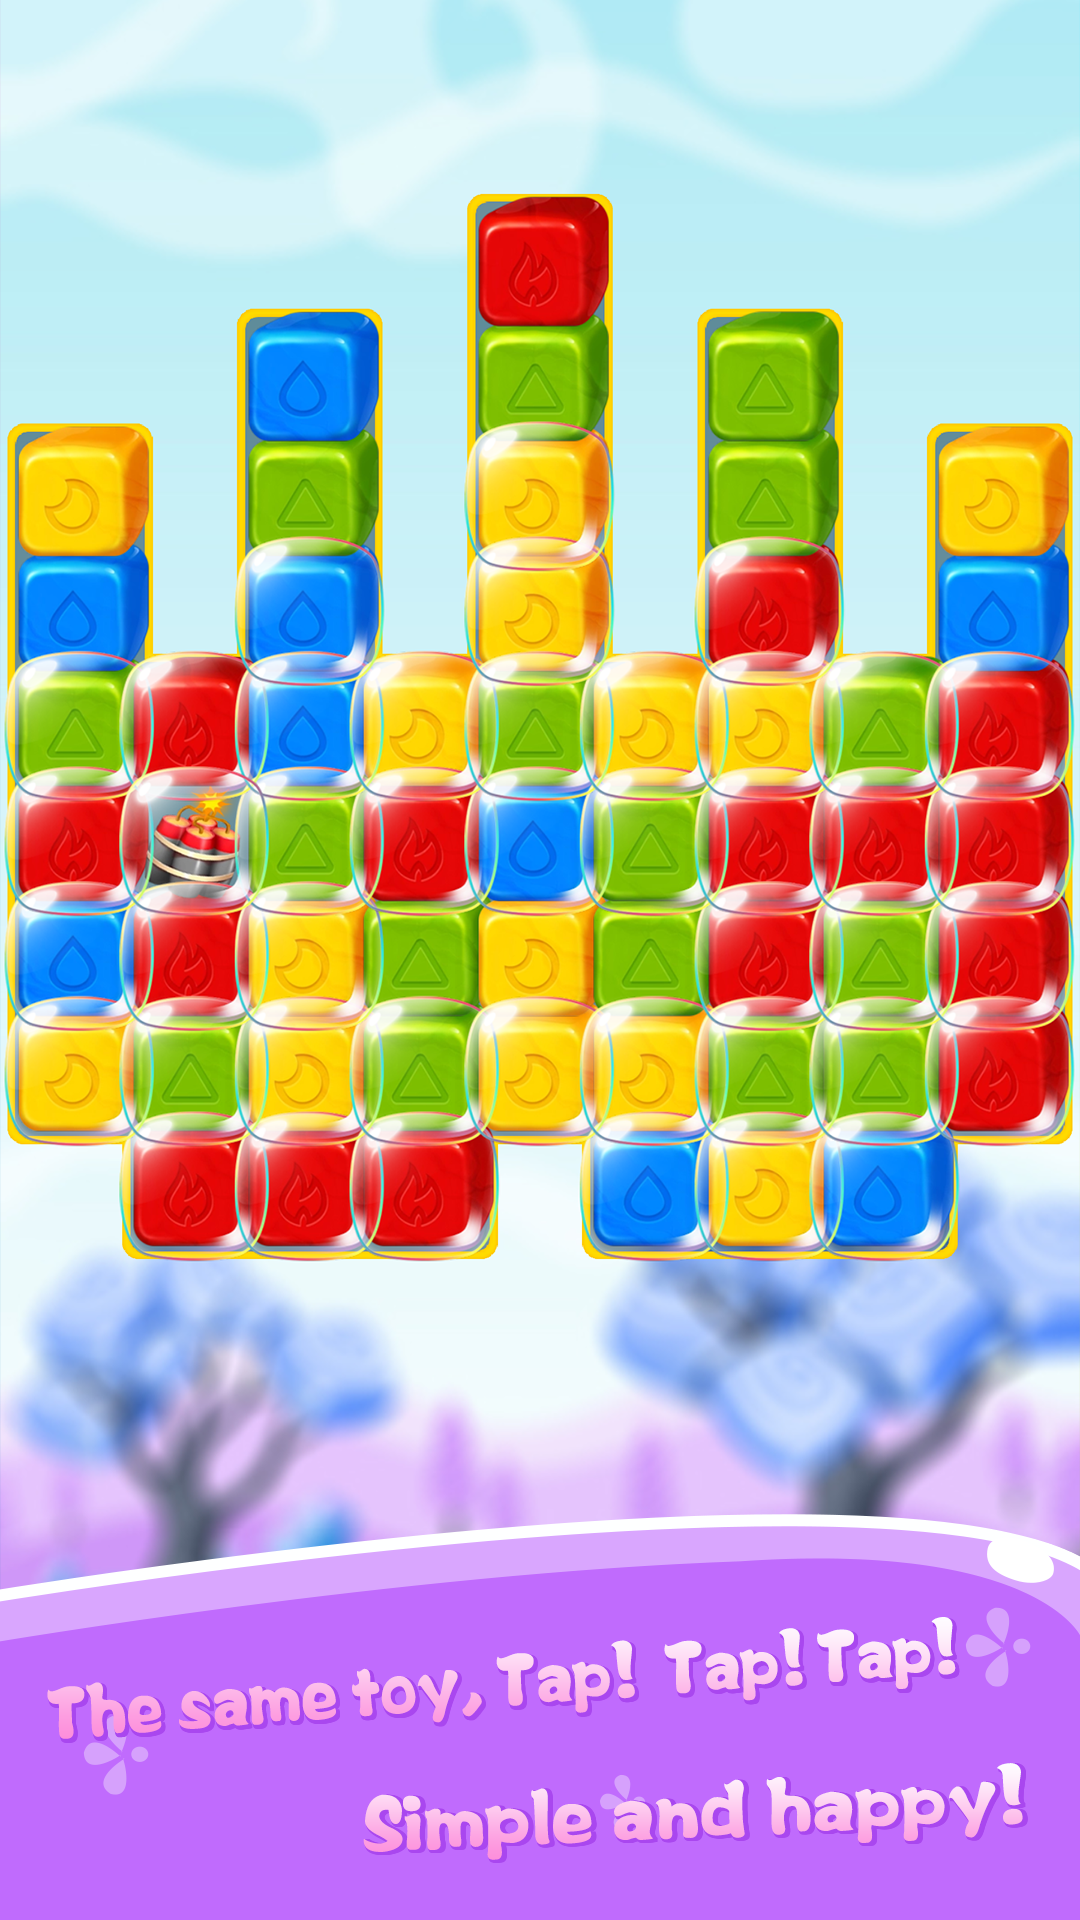 Screenshot 1 of aplastar cubos de juguete 1.0.9